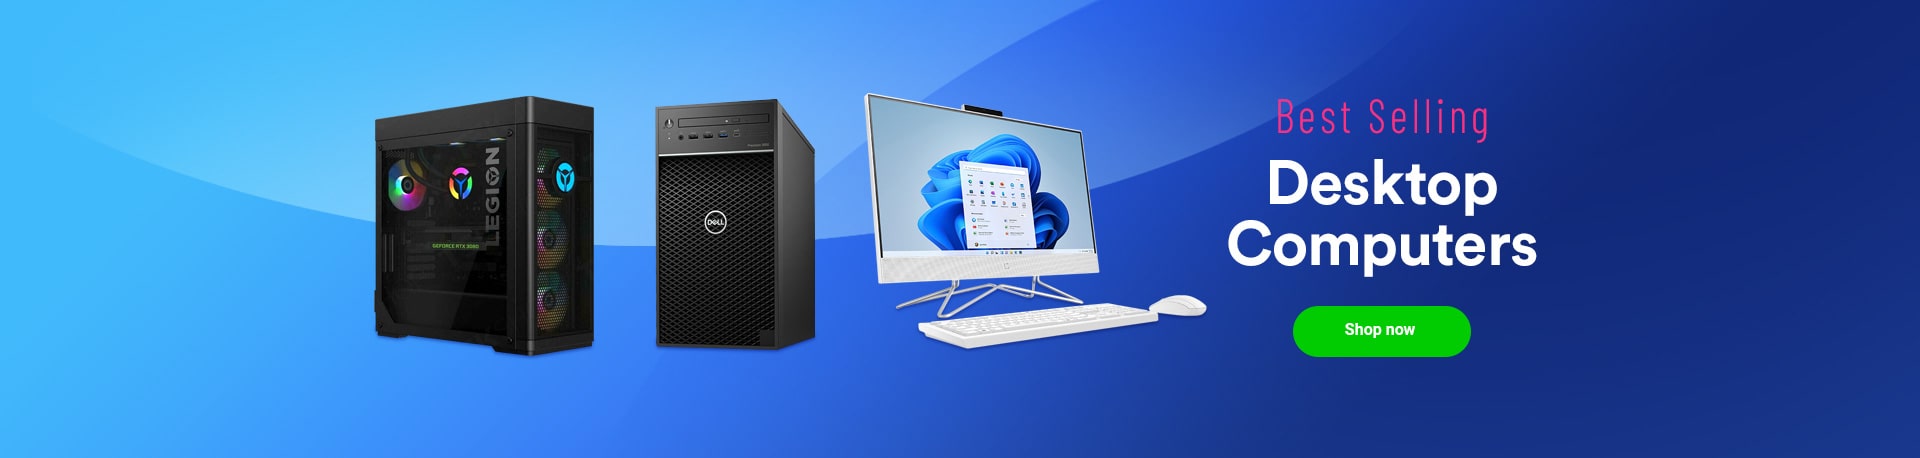 homepage - Desktop Computers